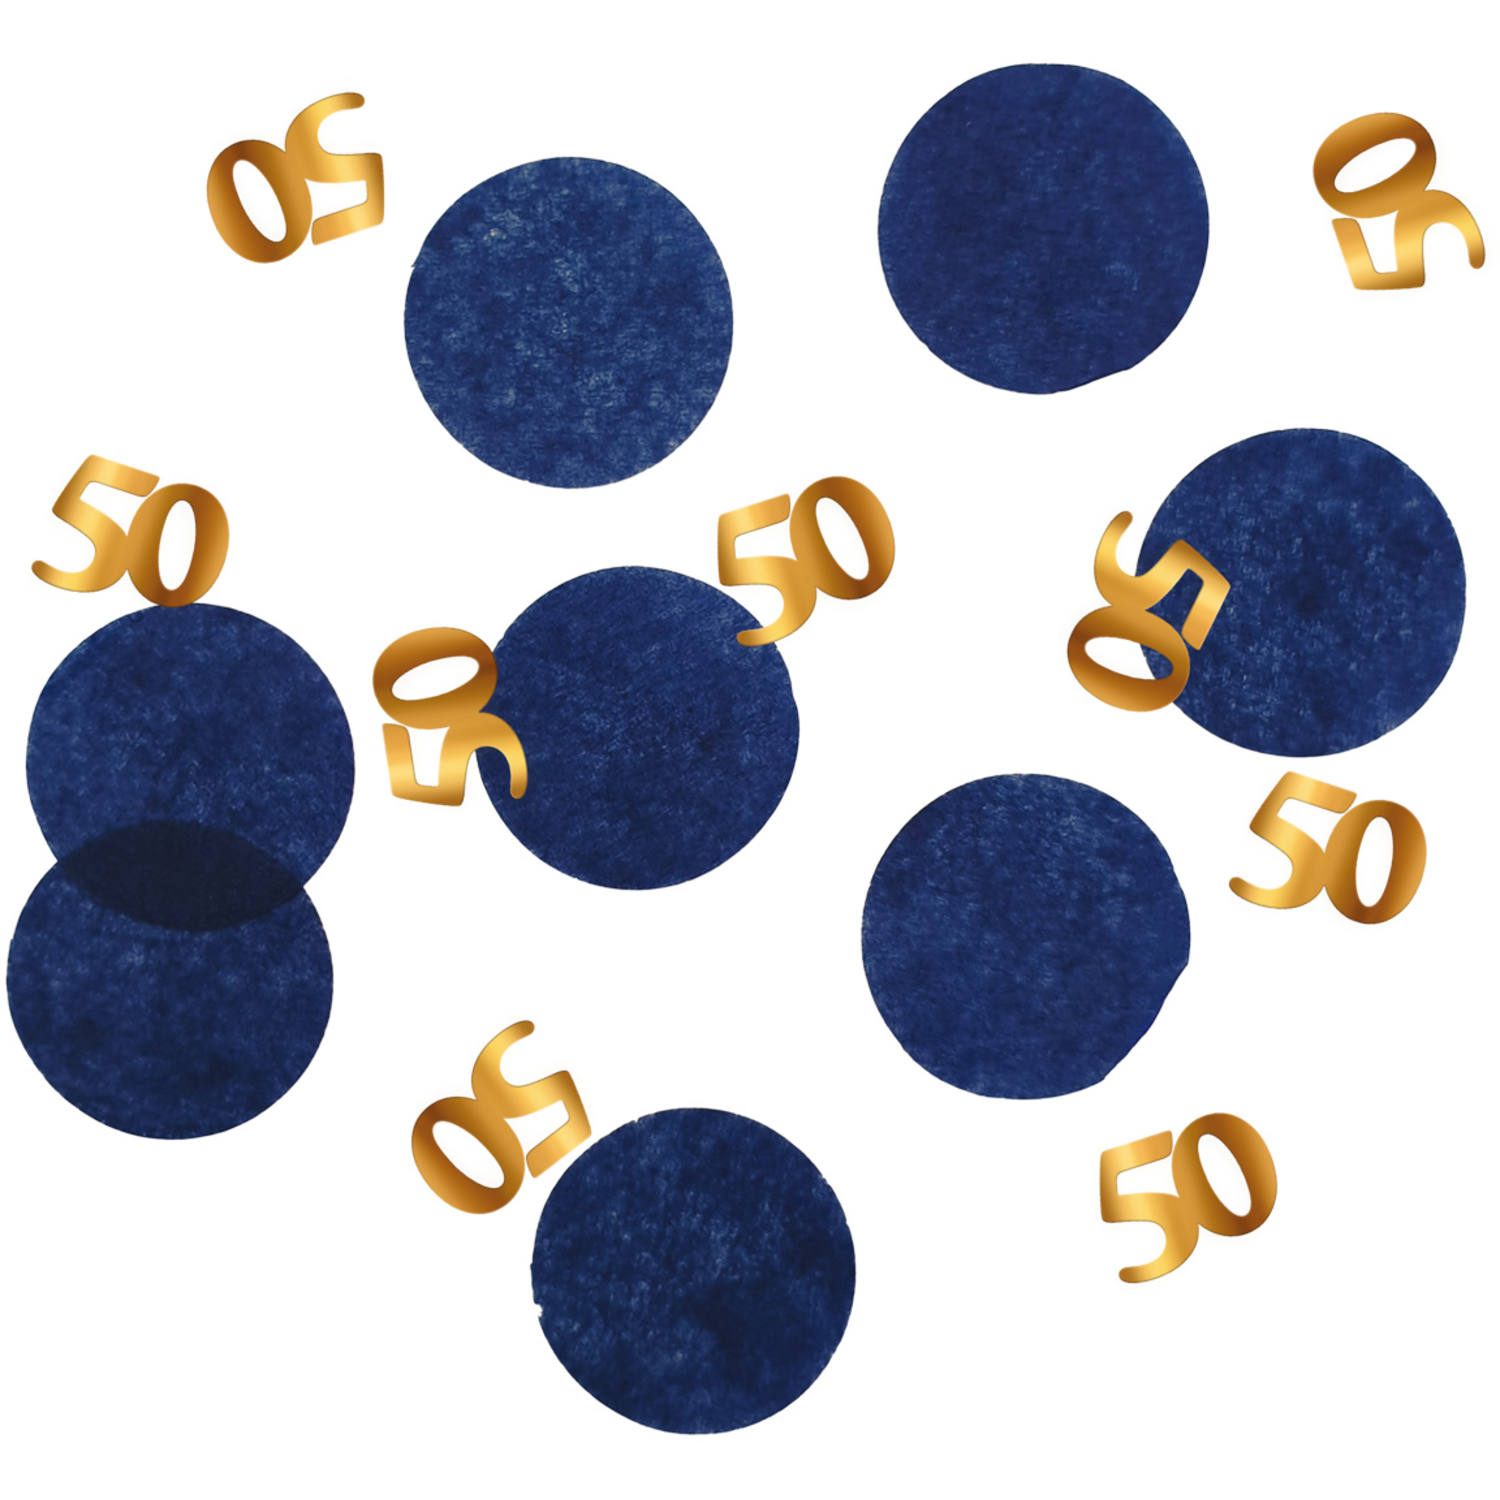 Confetti Elegant True Blue 50 Years - 25 gram 1